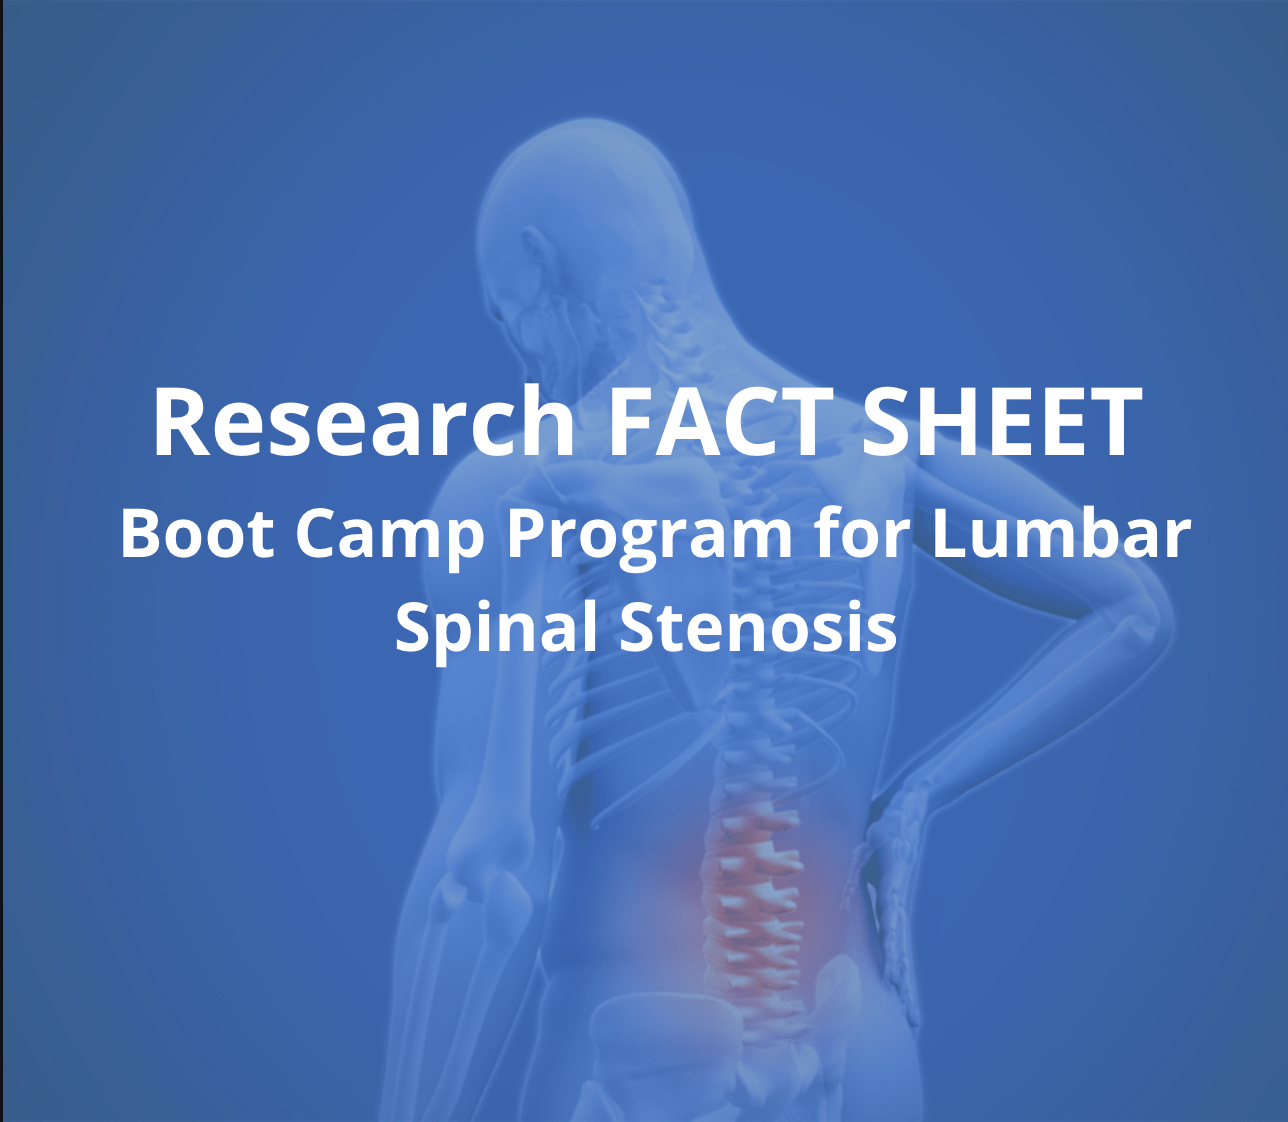 Face Sheet for Lumbar Spinal Stenosis